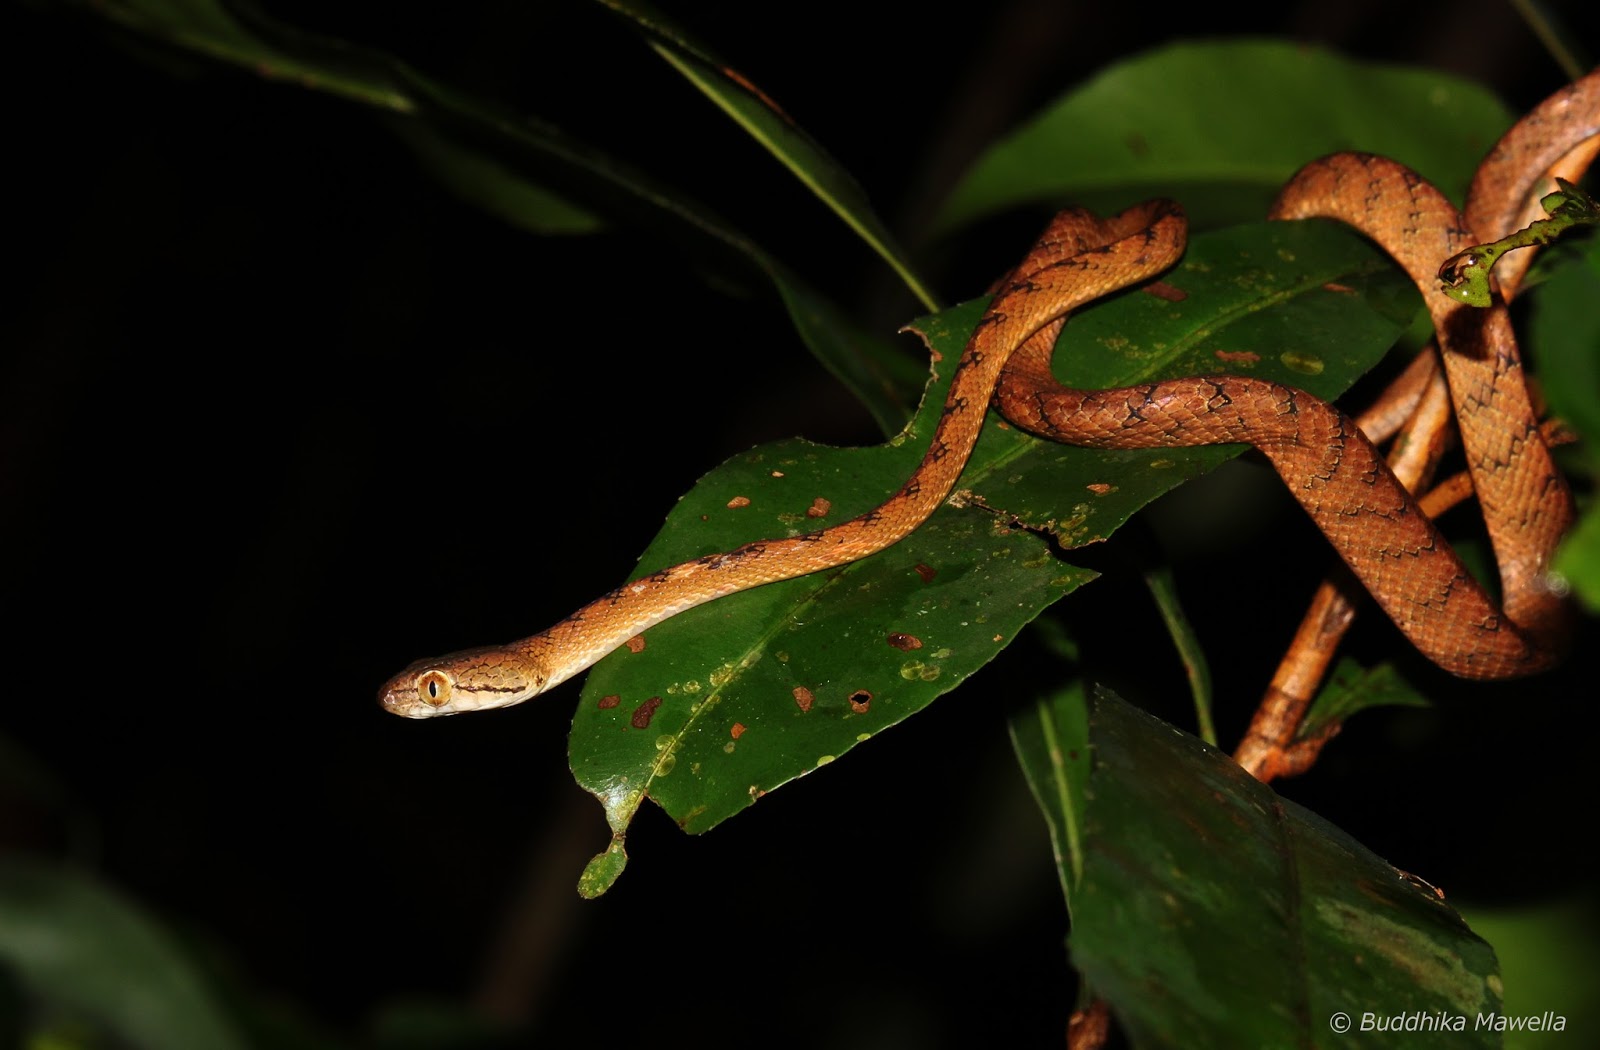 Lanka Nature Summary: Beddome's cat snake (Boiga beddomei)